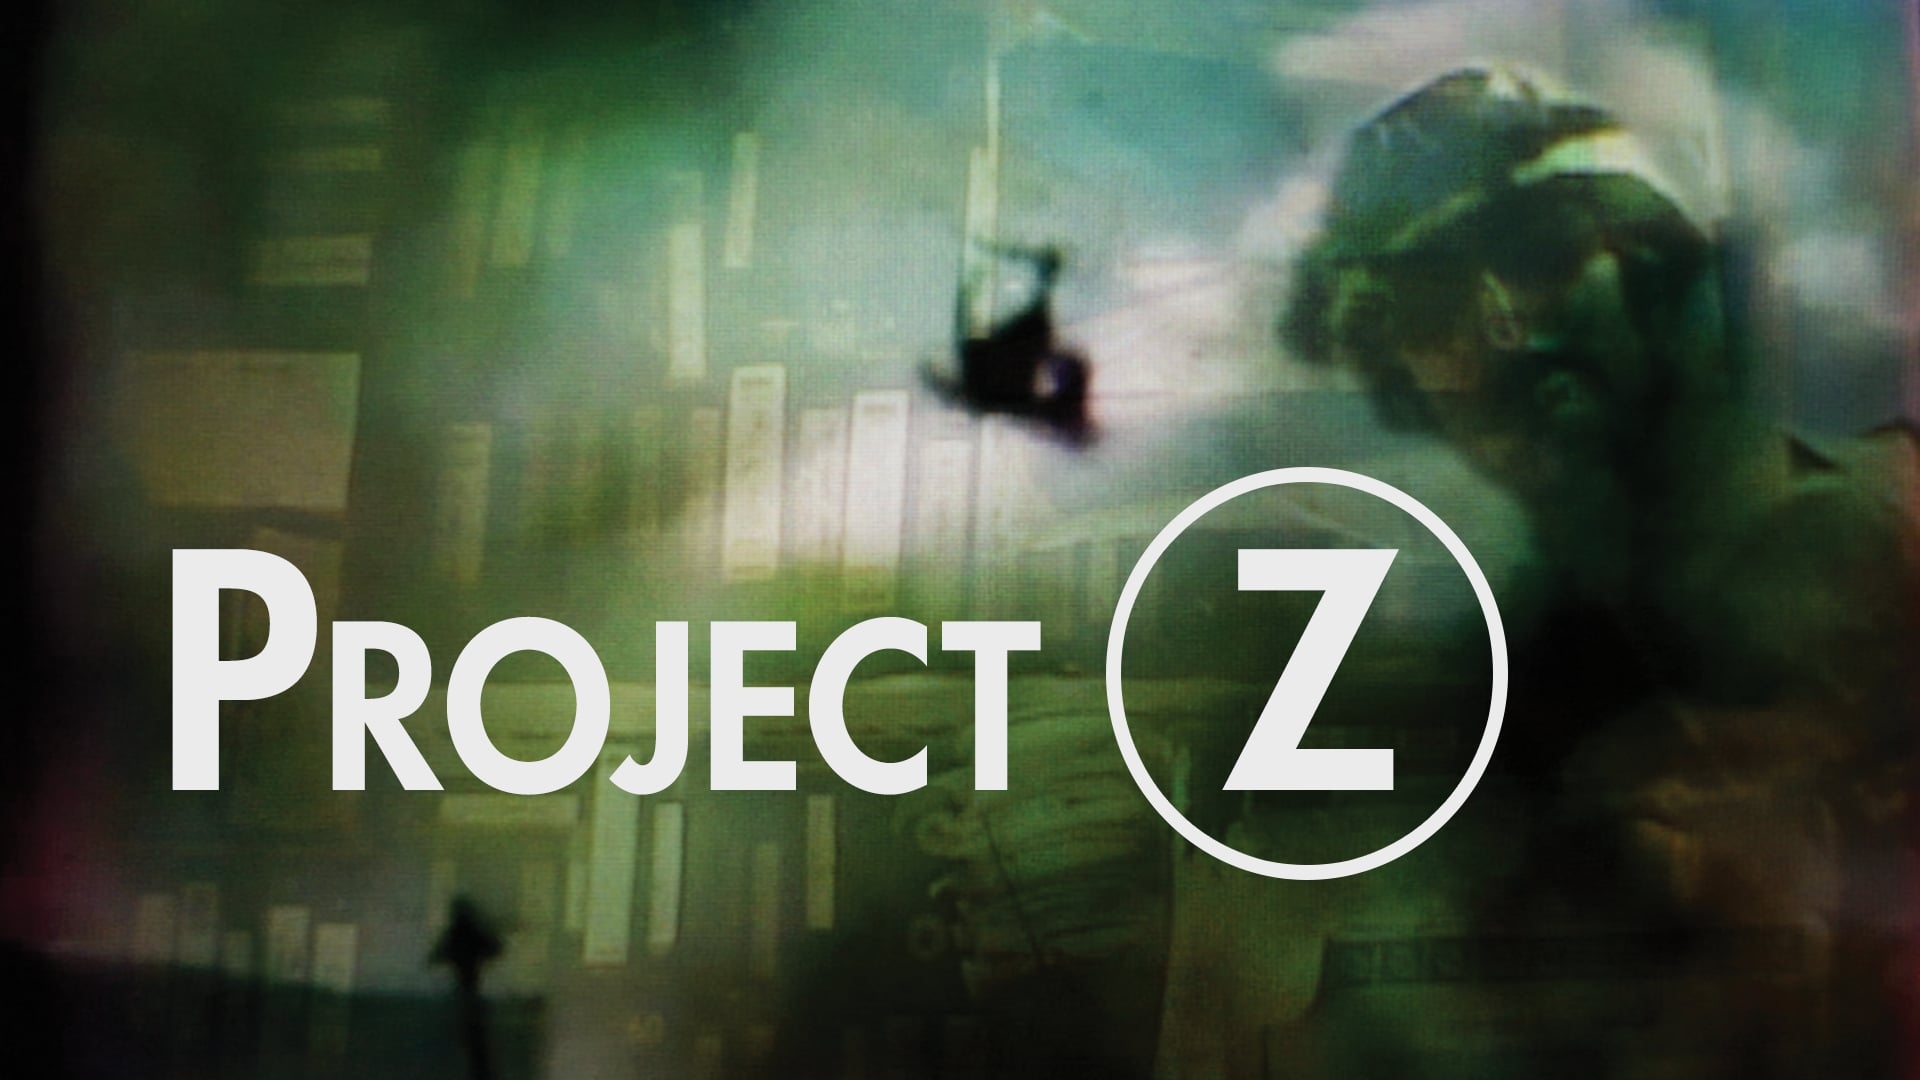 Watch Project Z Online Vimeo On Demand on Vimeo